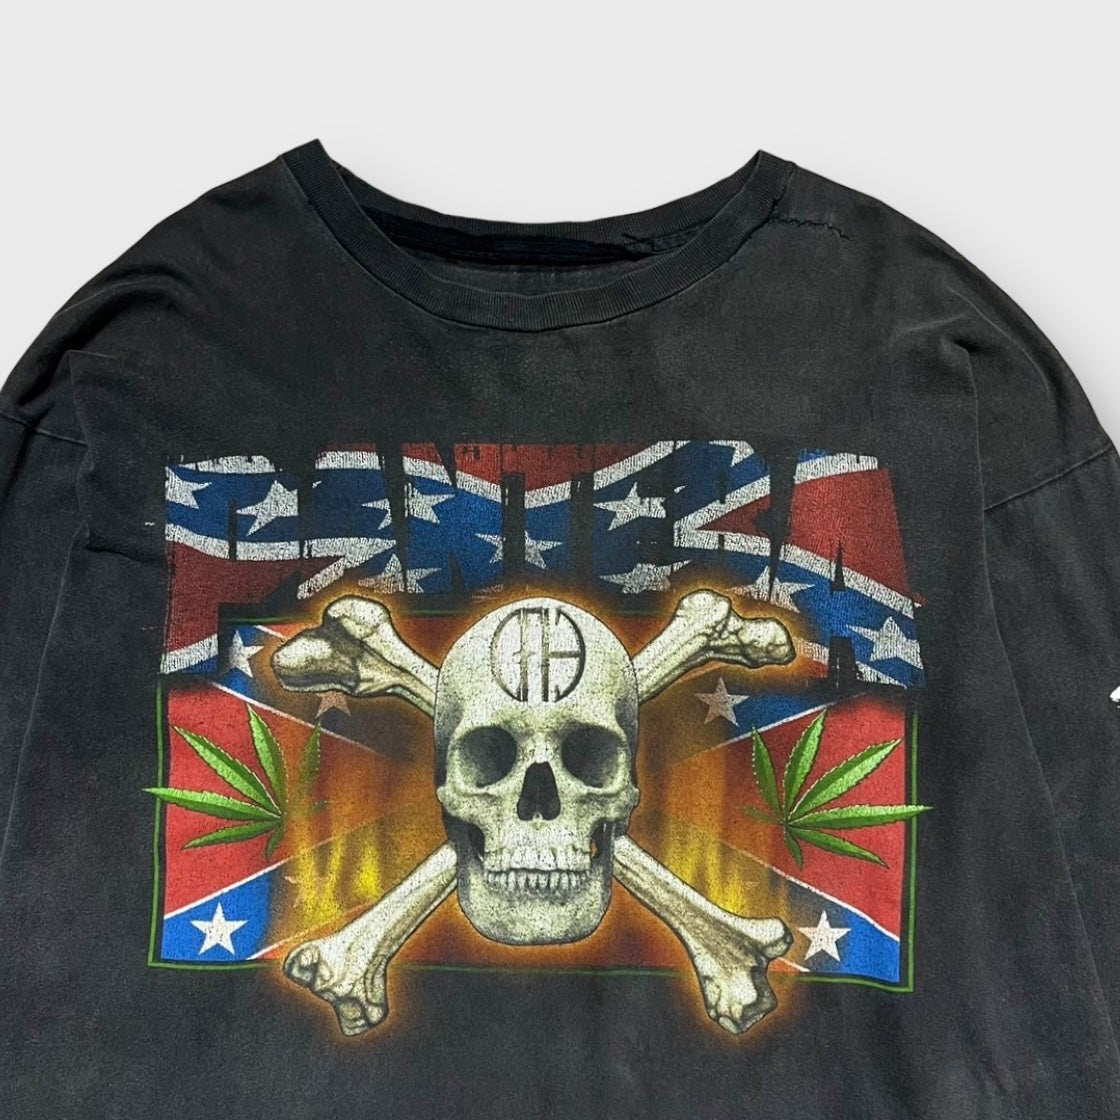 90's "PANTERA" Cowboys from Hell l/s t-shirt